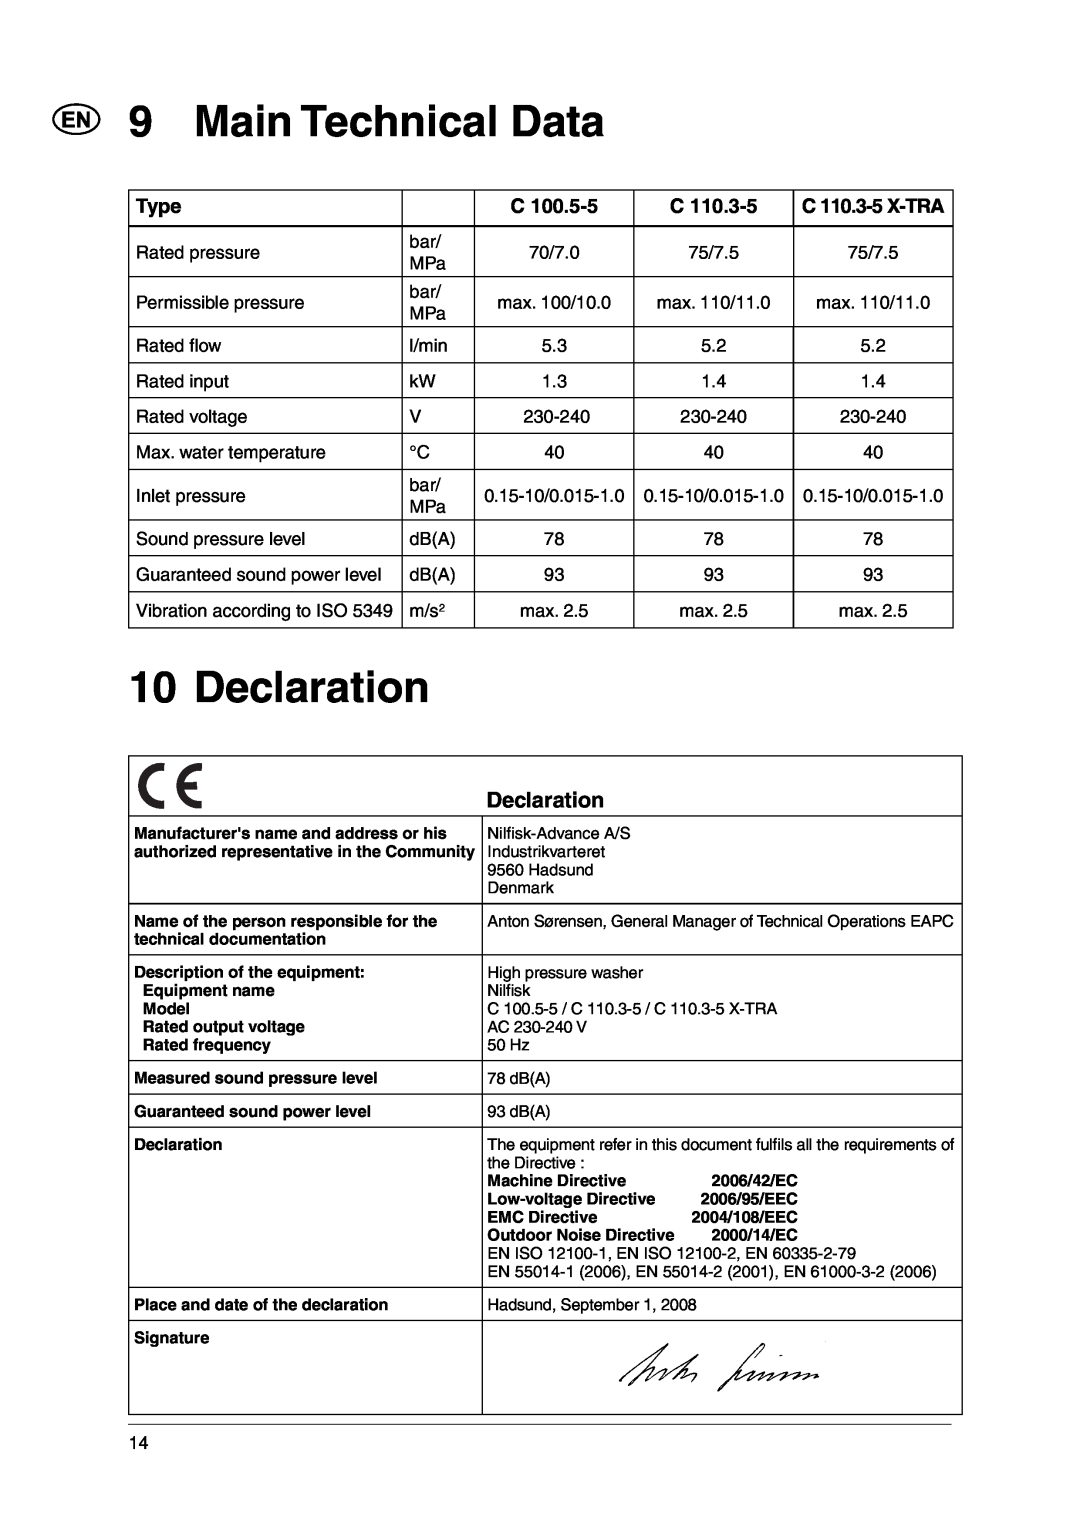 Nilfisk-Advance America C 110.3 X-TRA, C 100.5 user manual Main Technical Data, Declaration, Type, C 110.3-5 X-TRA 